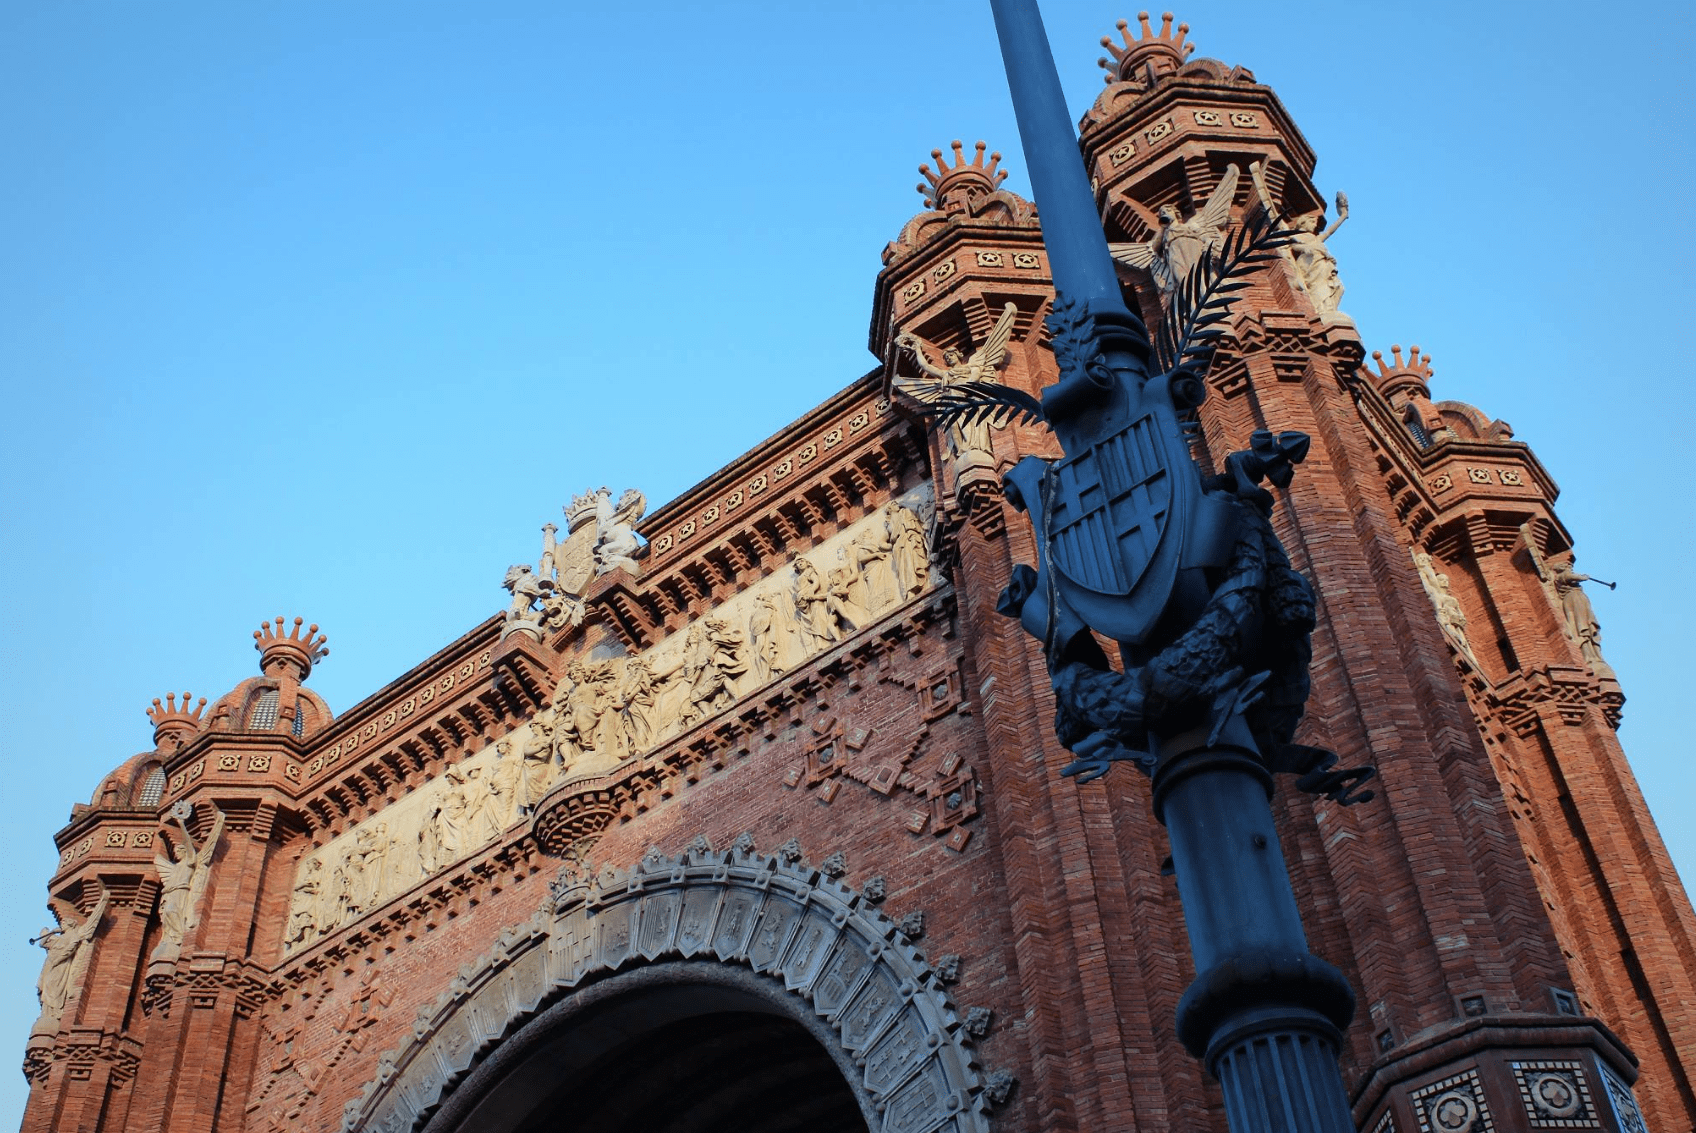 The Catalan version of the Arc de Triomphe